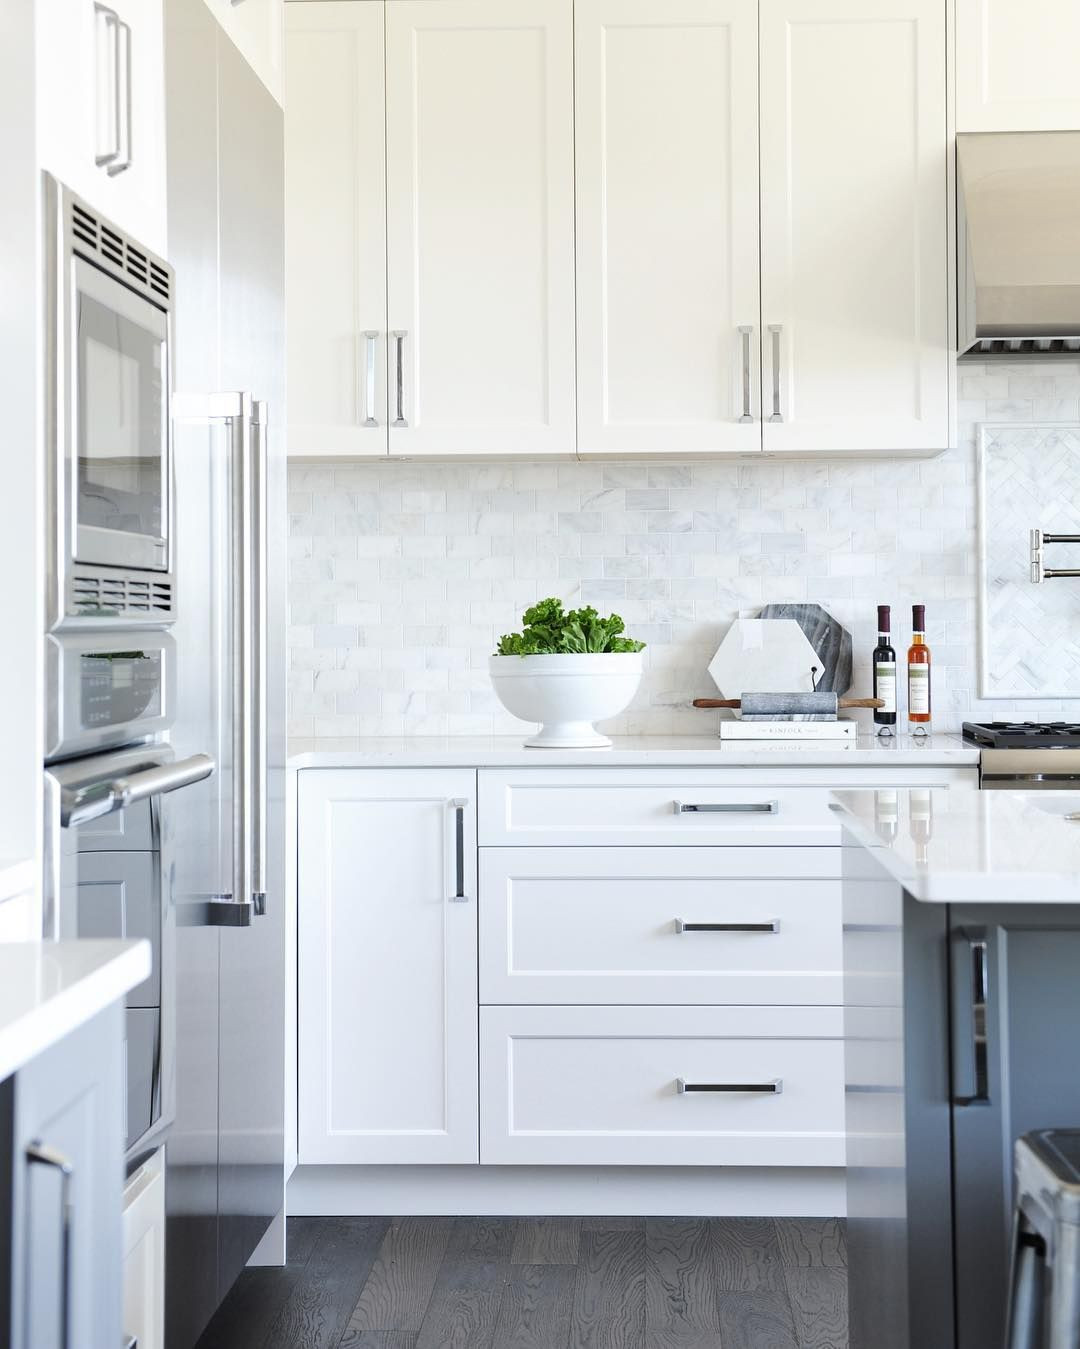 White Kitchen Cabinet Handles
 Amanda Evans on Instagram “I love this kitchen White